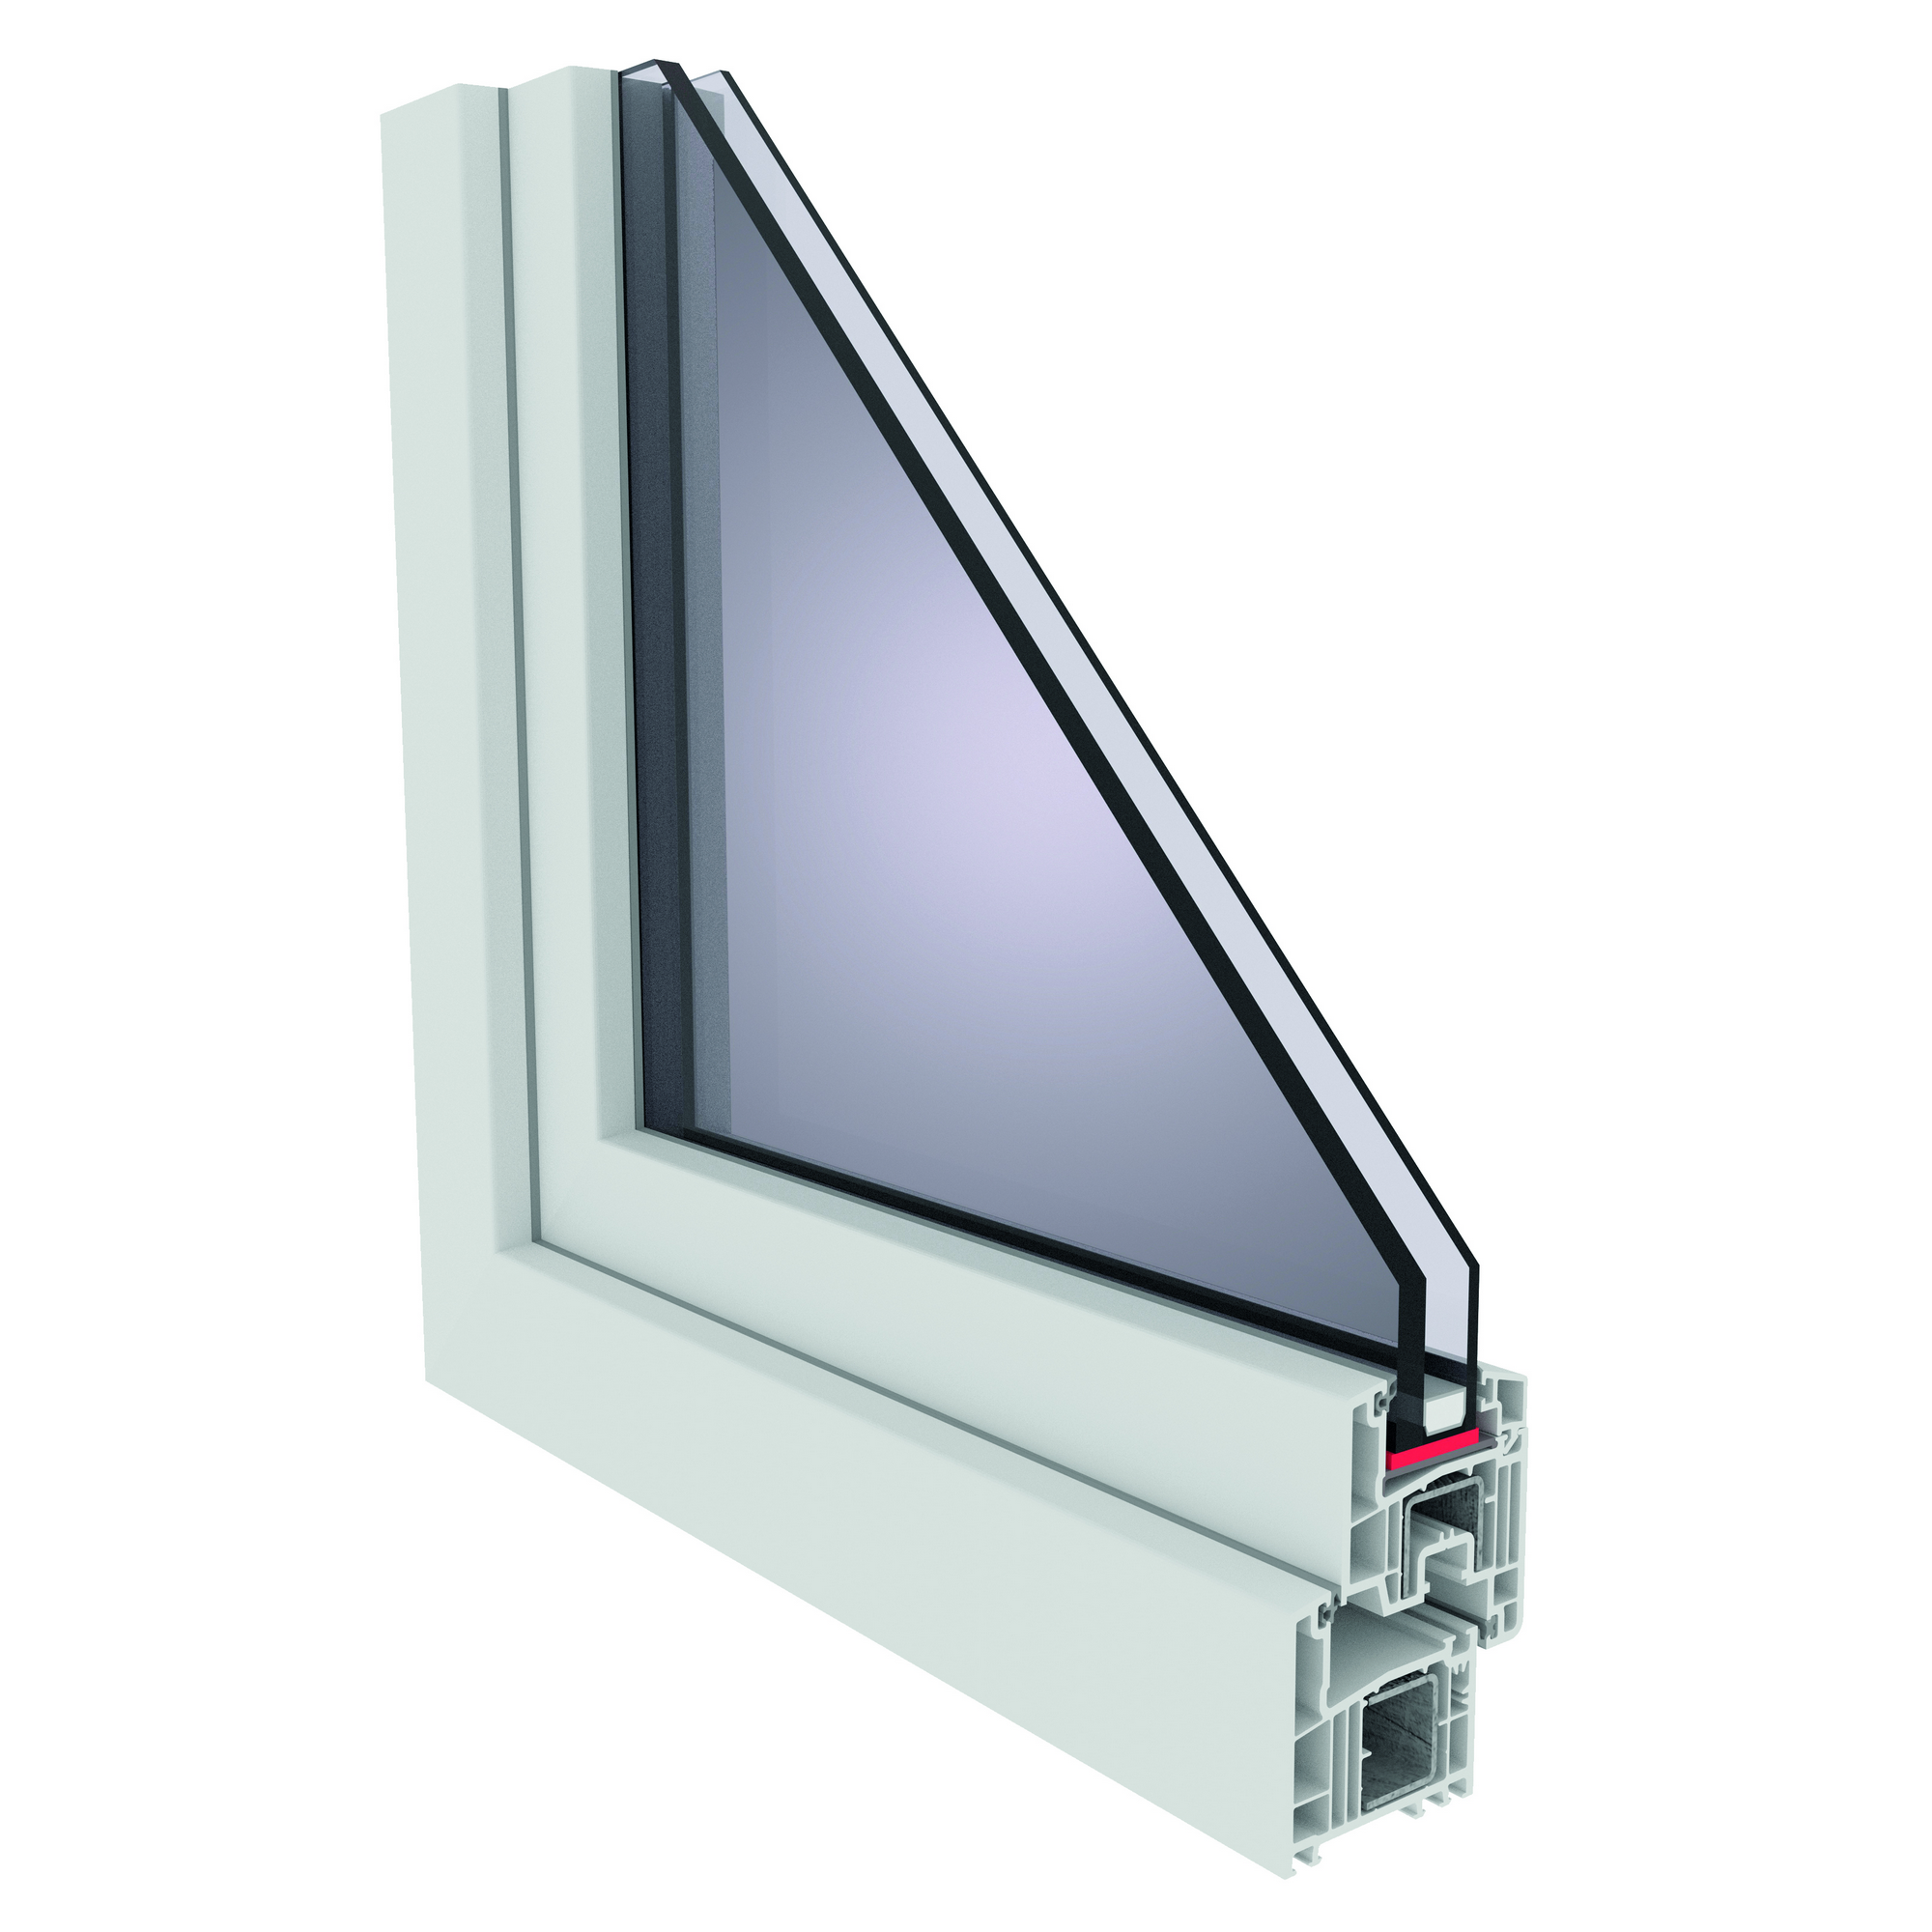 Sicherheitsfenster 'FL 700A RC2' 60 x 60 cm LS + product picture